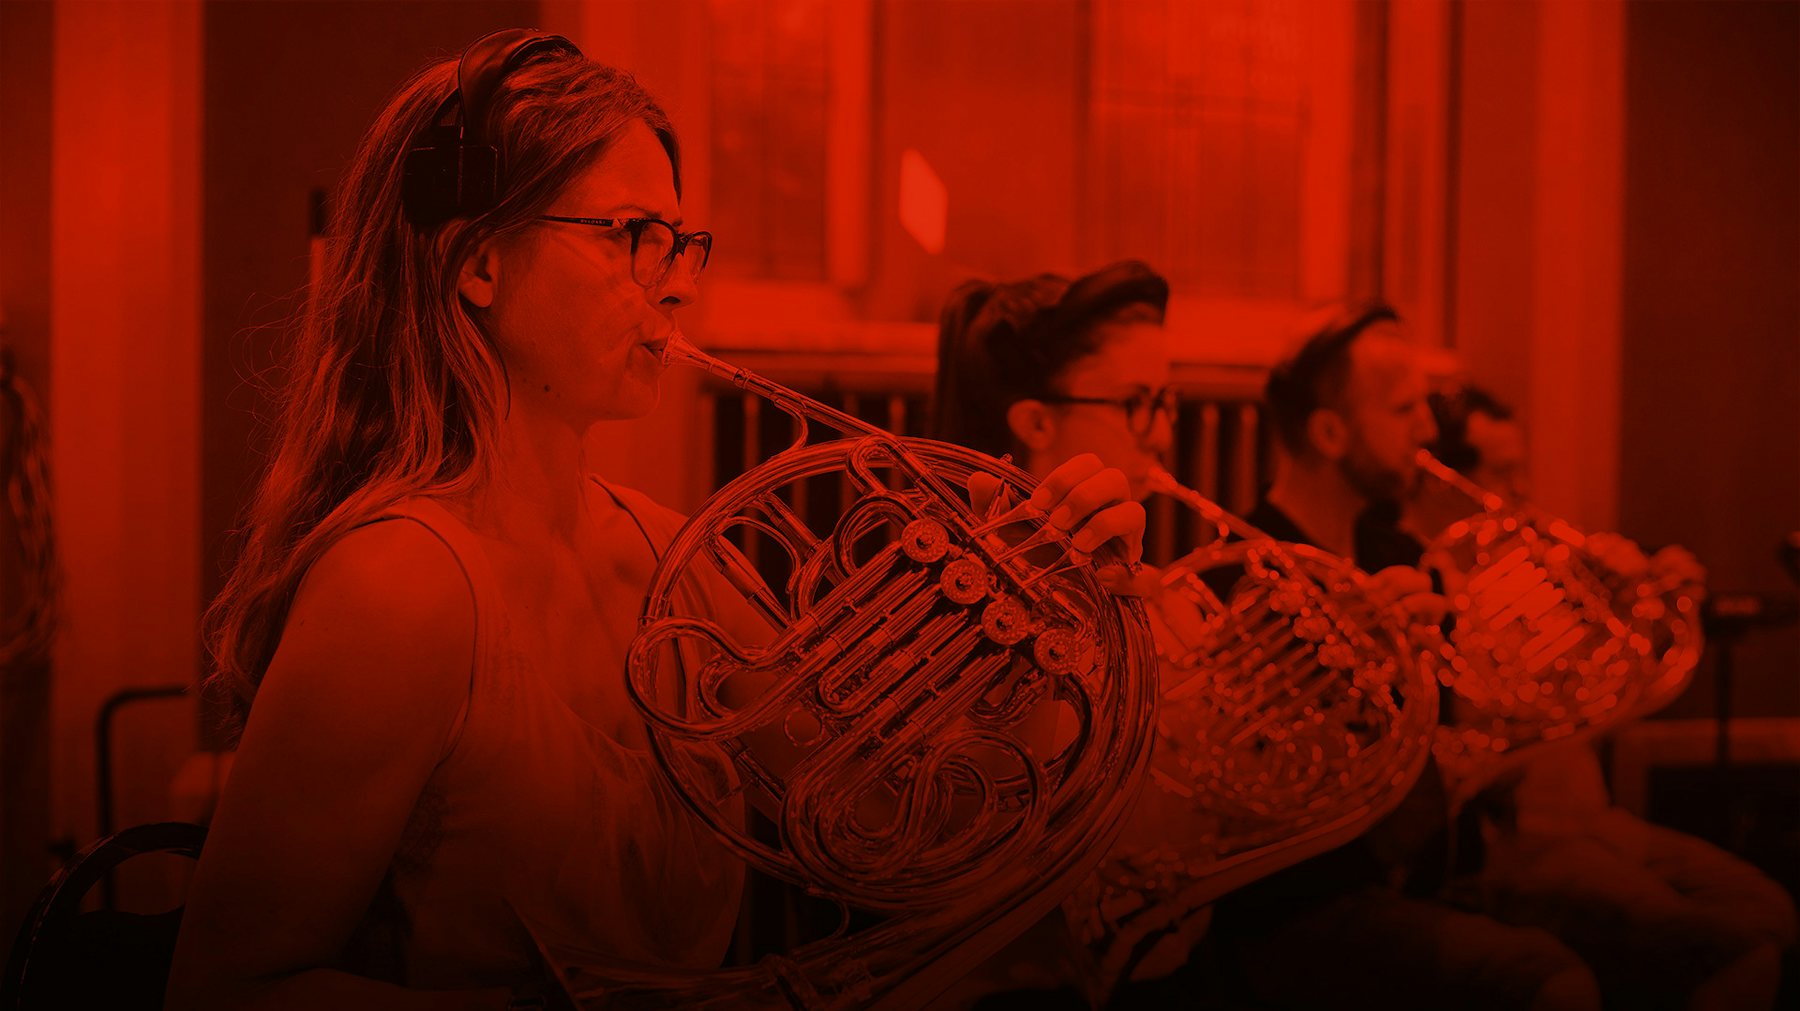 Studio brass tuba player